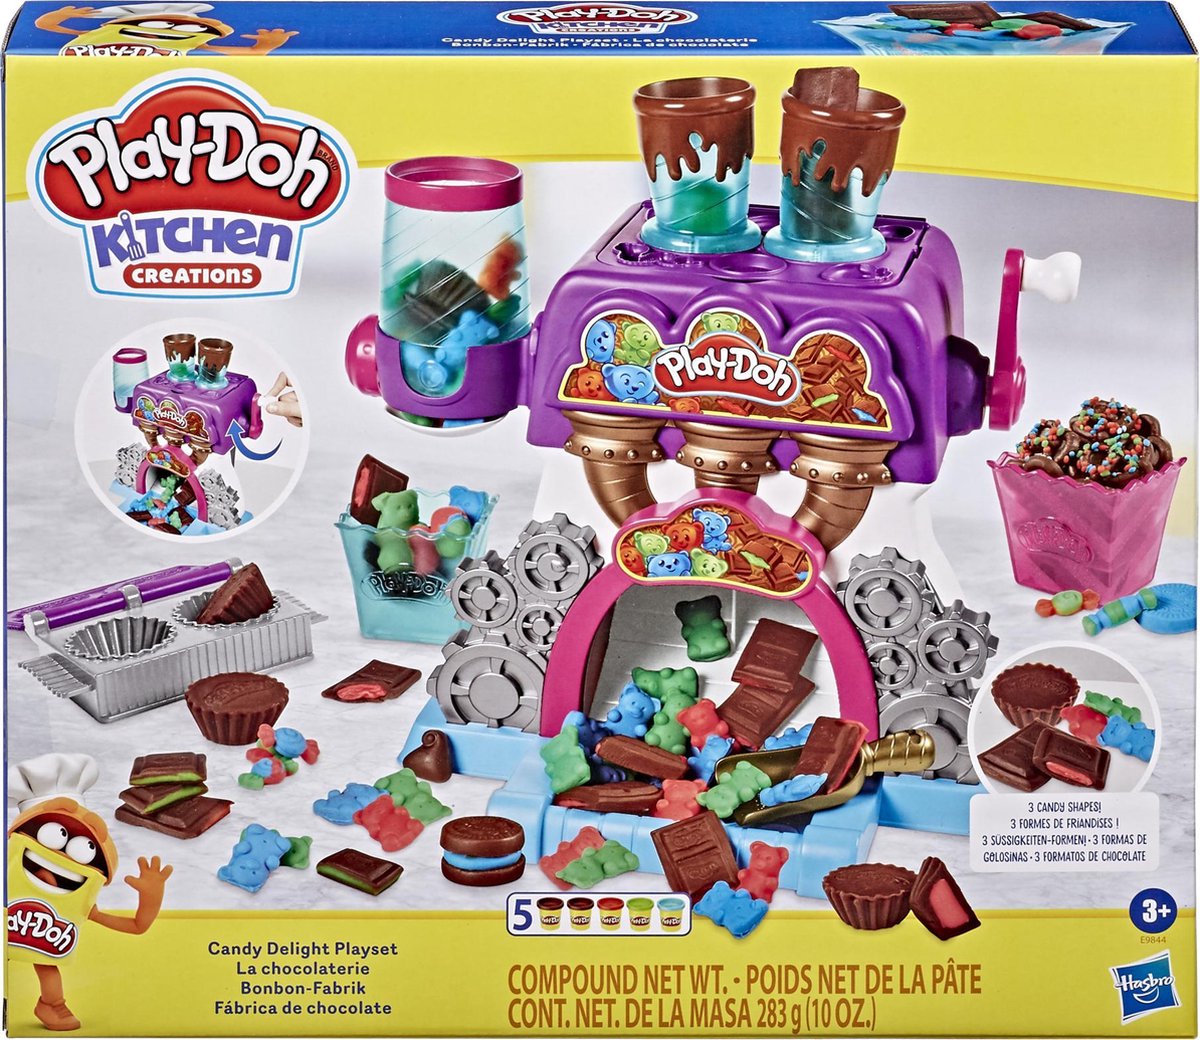 Hasbro Play Doh kleiset Candy Delight junior roze/blauw 13 delig